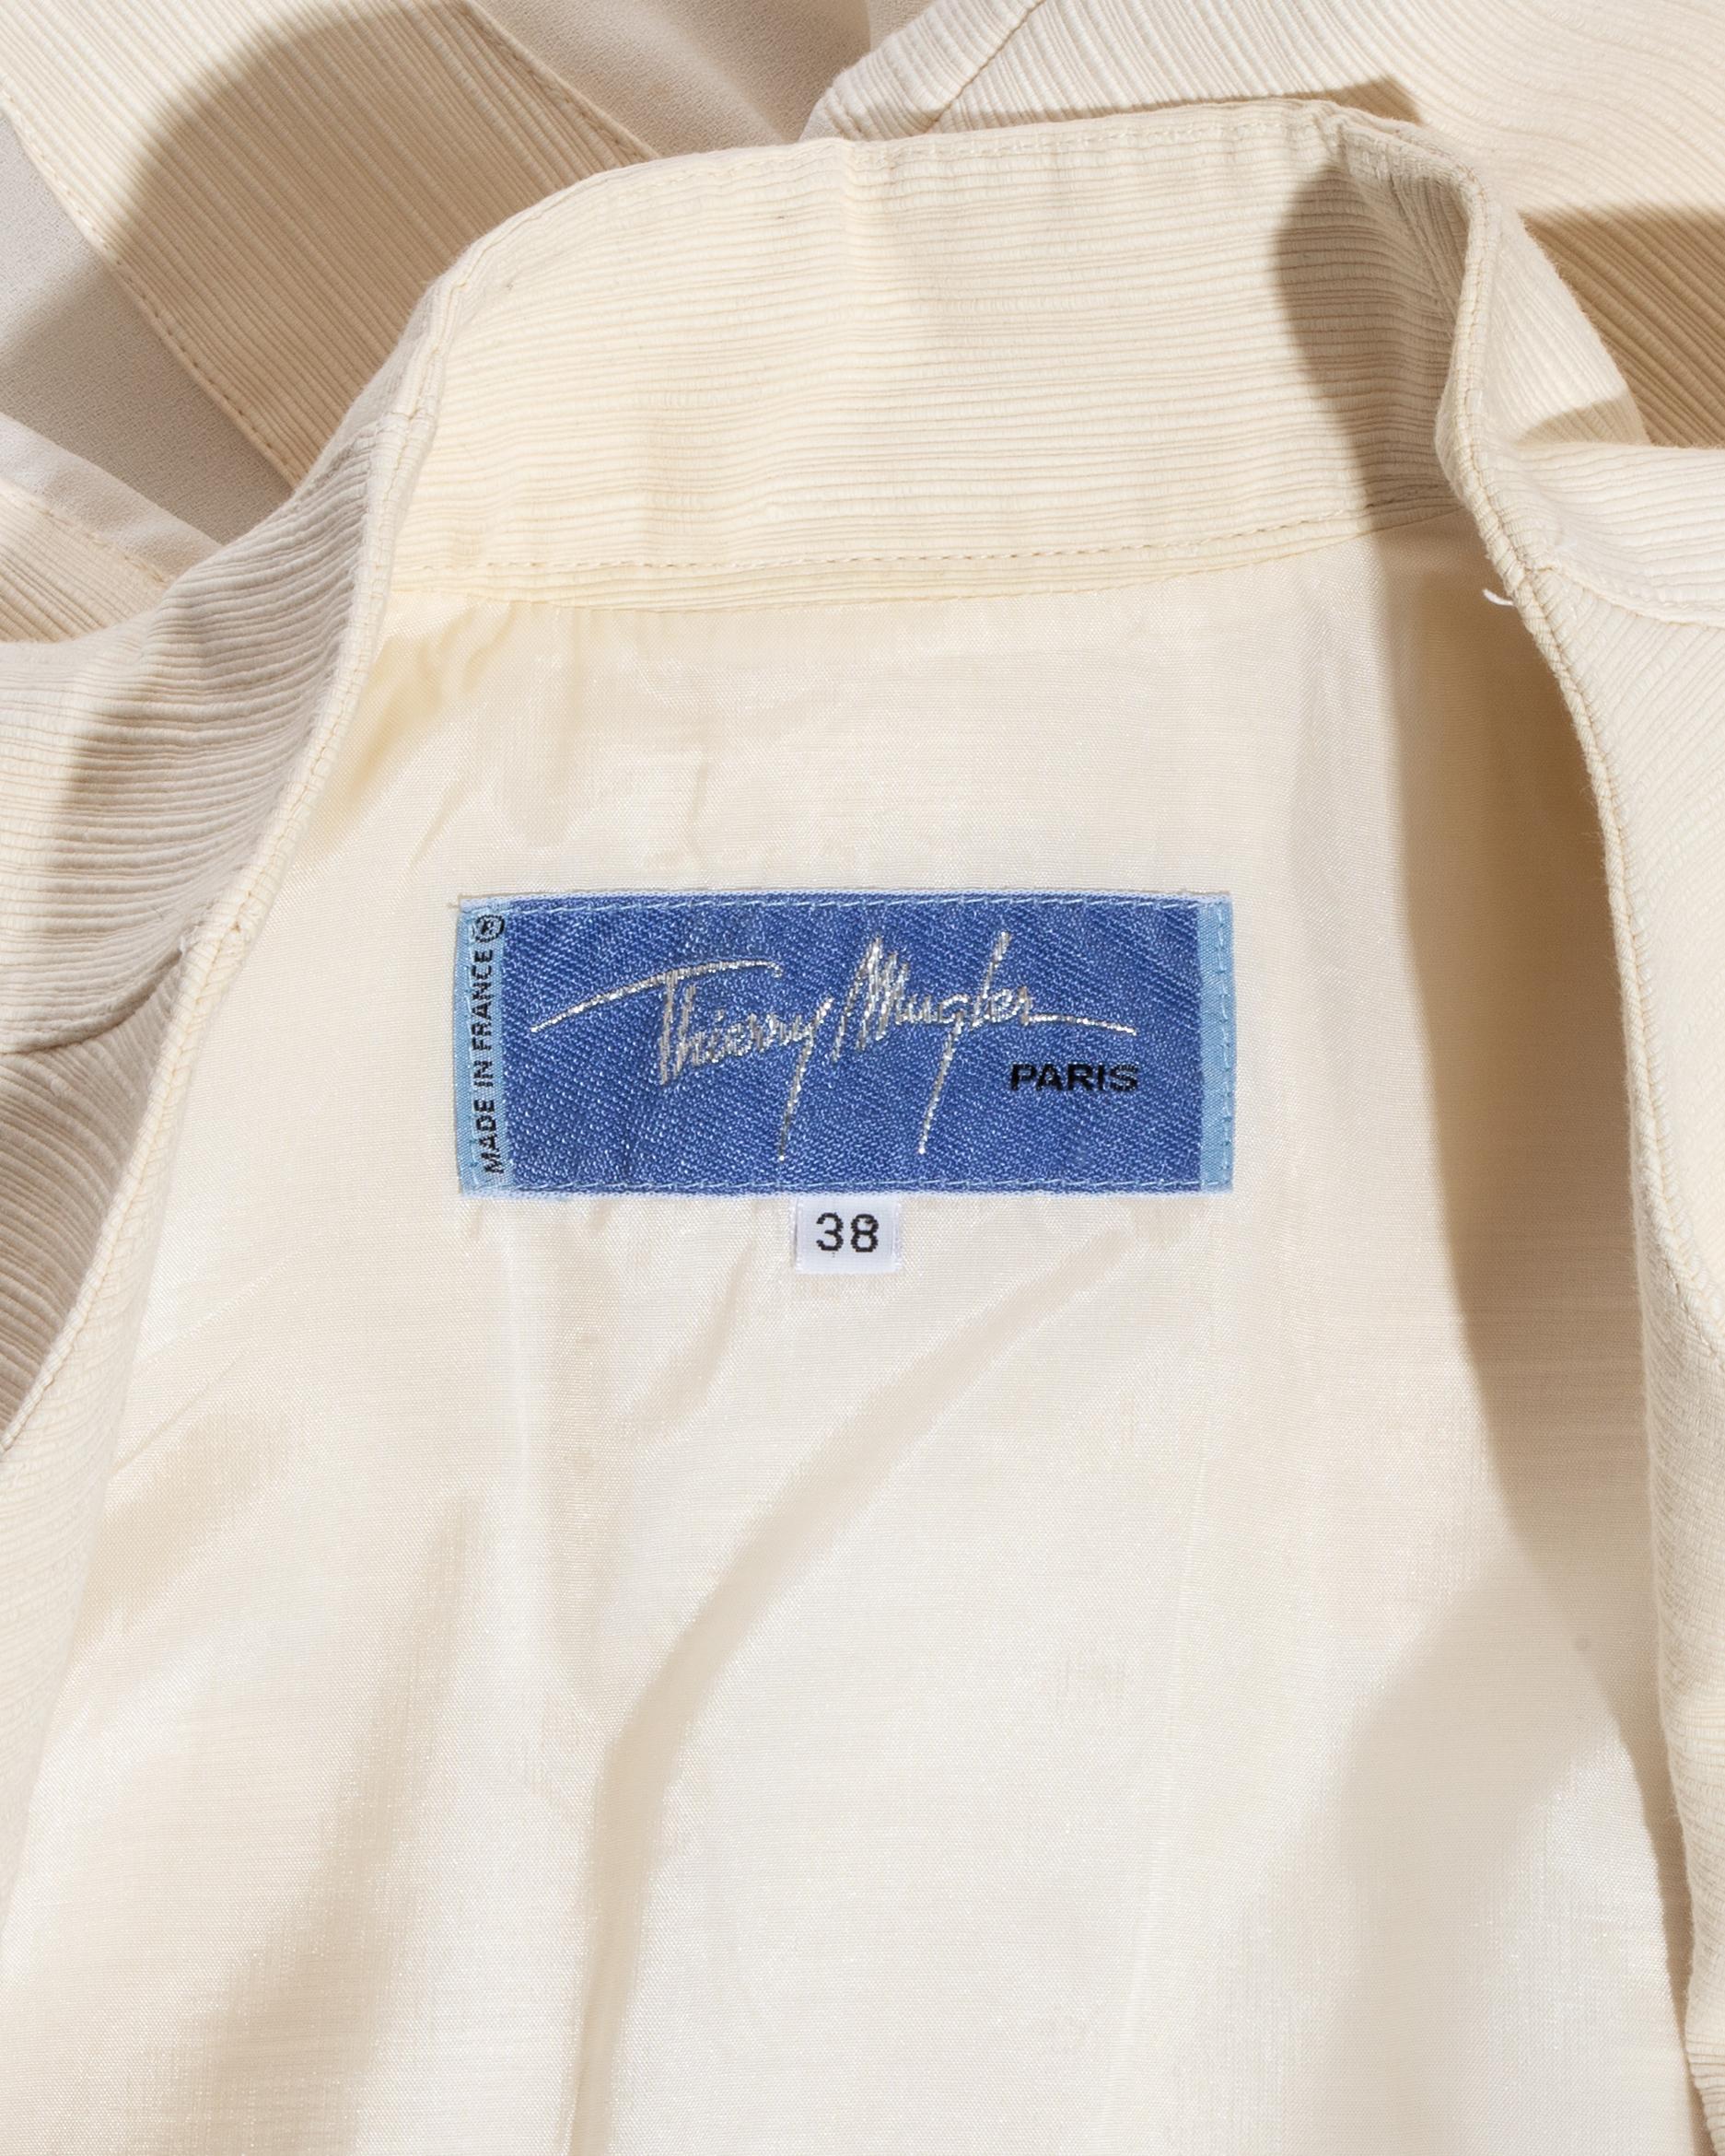 Thierry Mugler cream draped skirt suit with sheer panels, c. 1990s 2